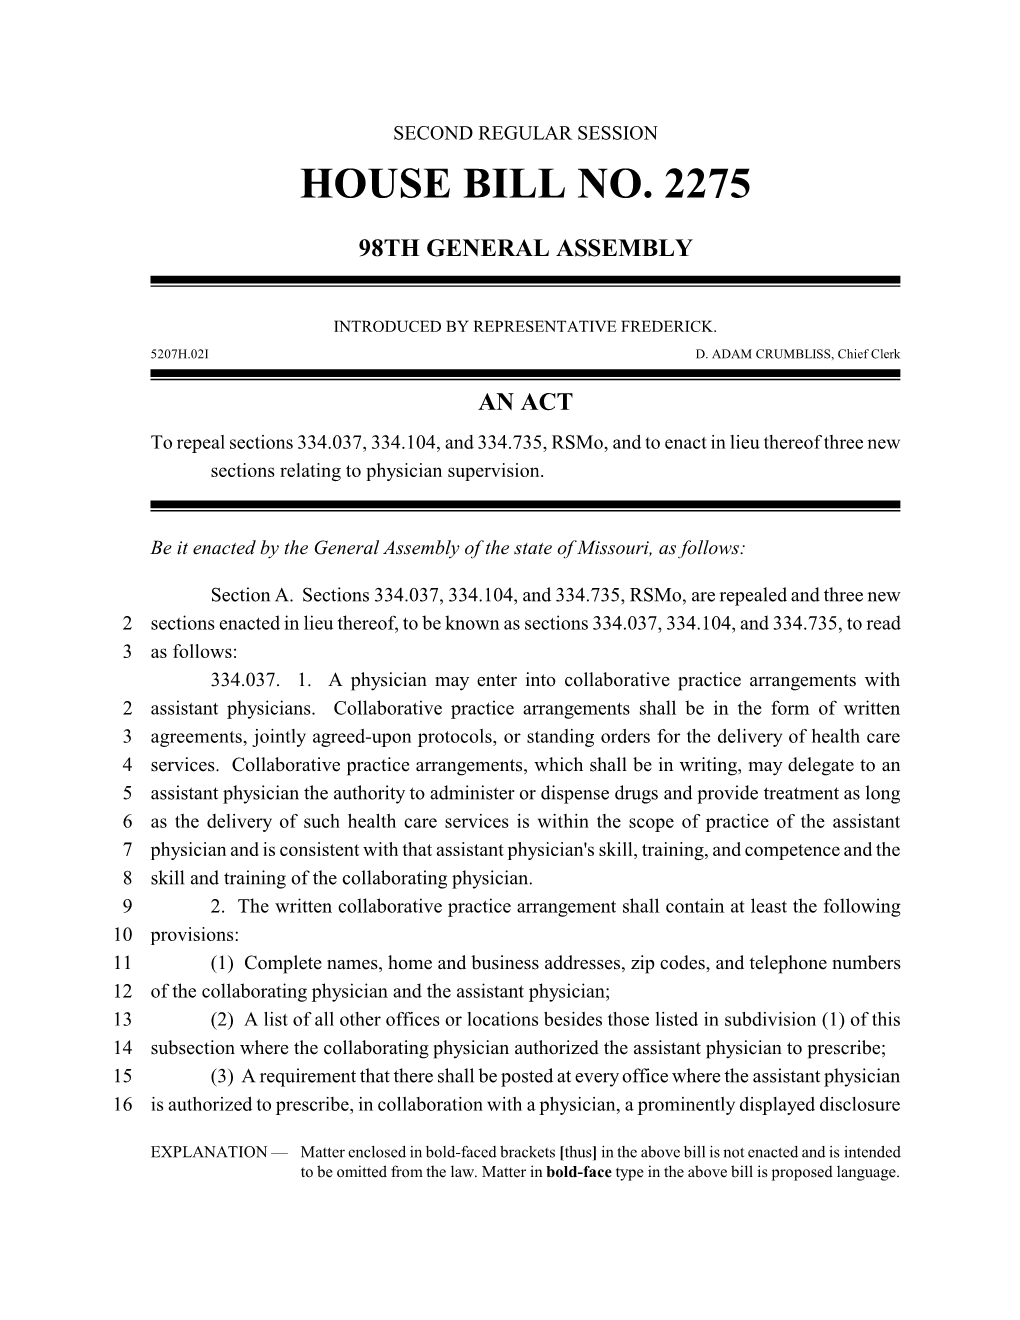 House Bill No. 2275